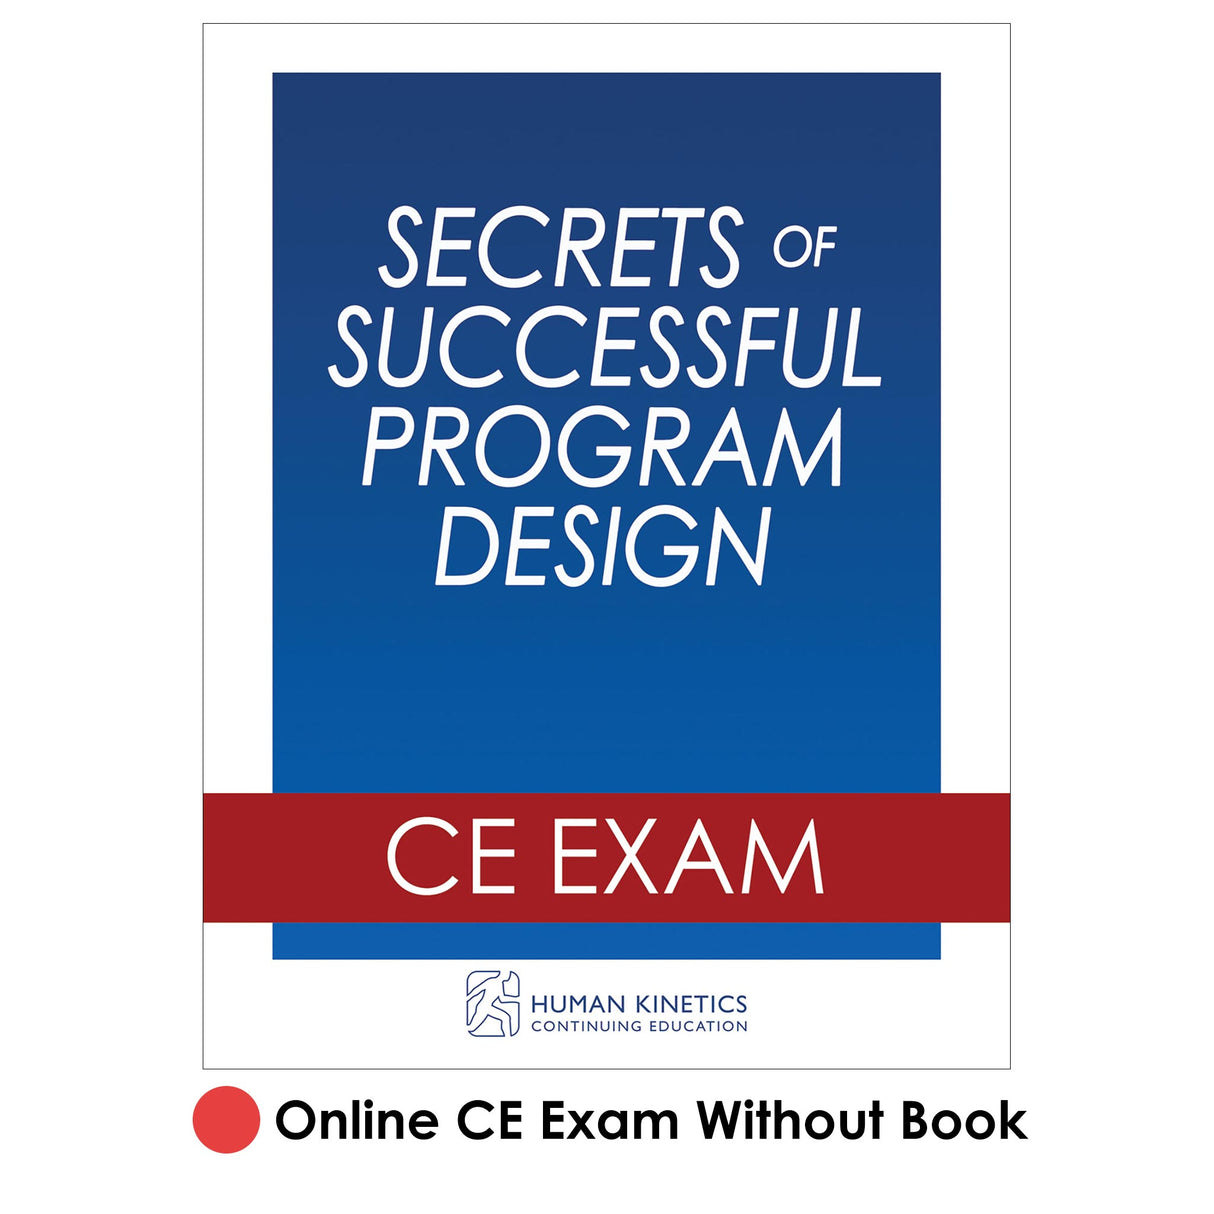 Secrets of Successful Program Design Online CE Exam Without Book